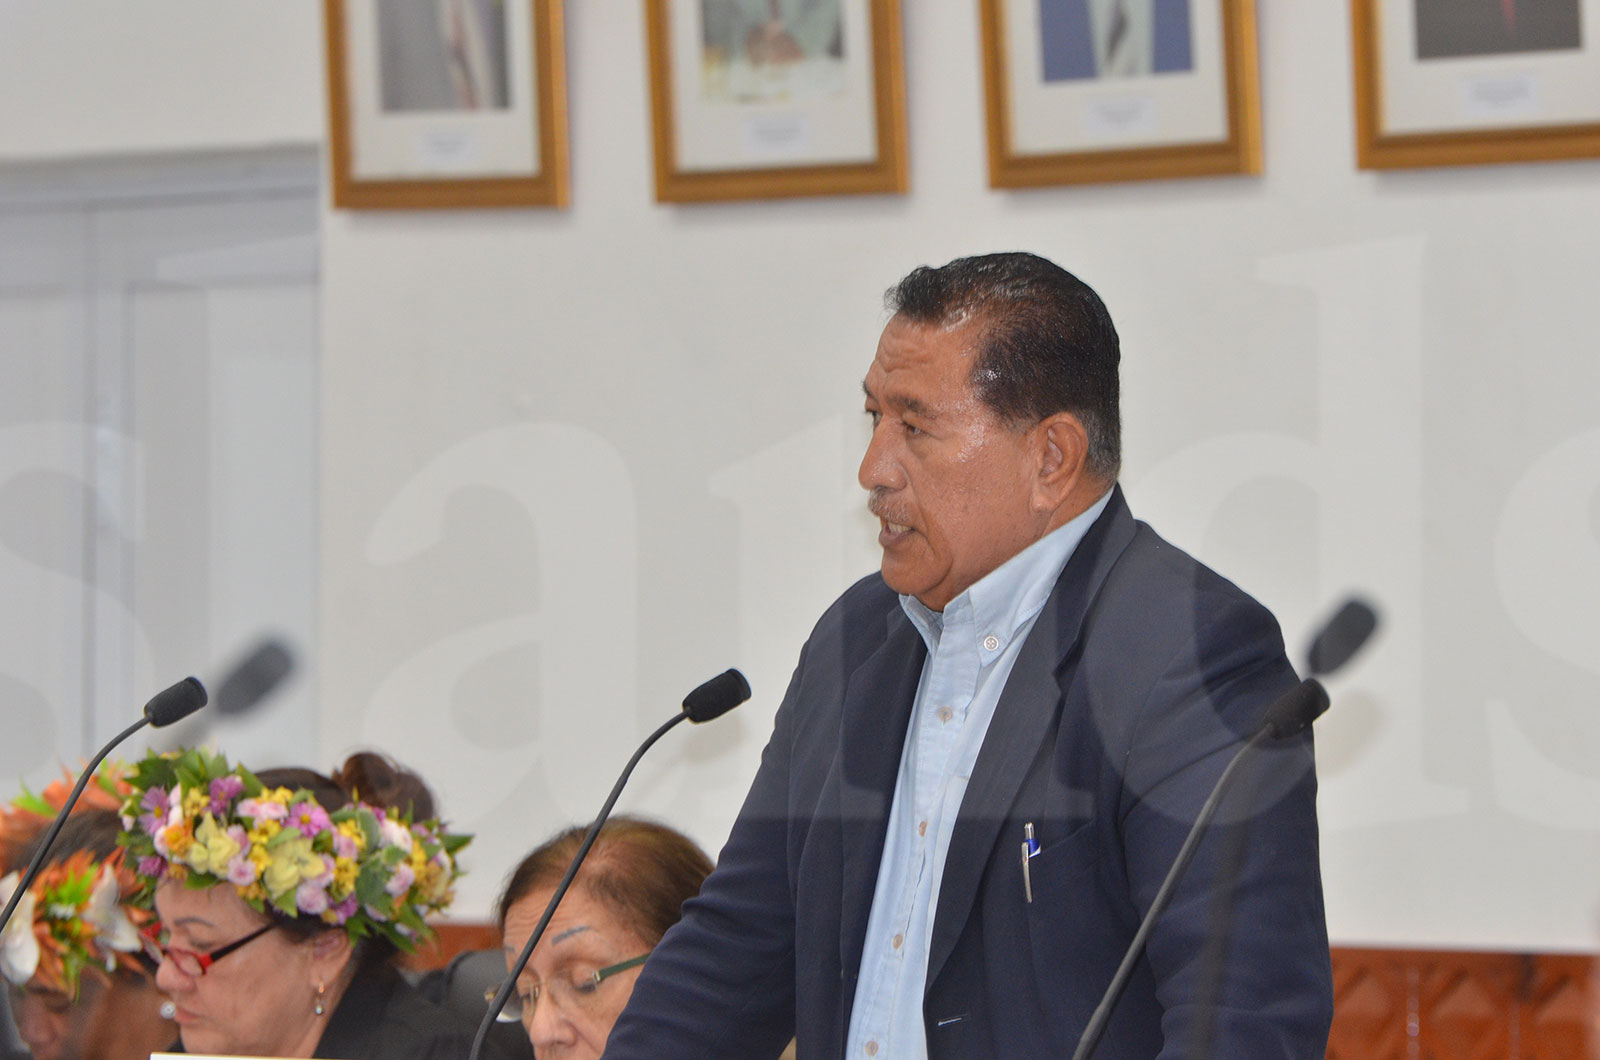 MP calls for more teaching of Cook Islands Māori